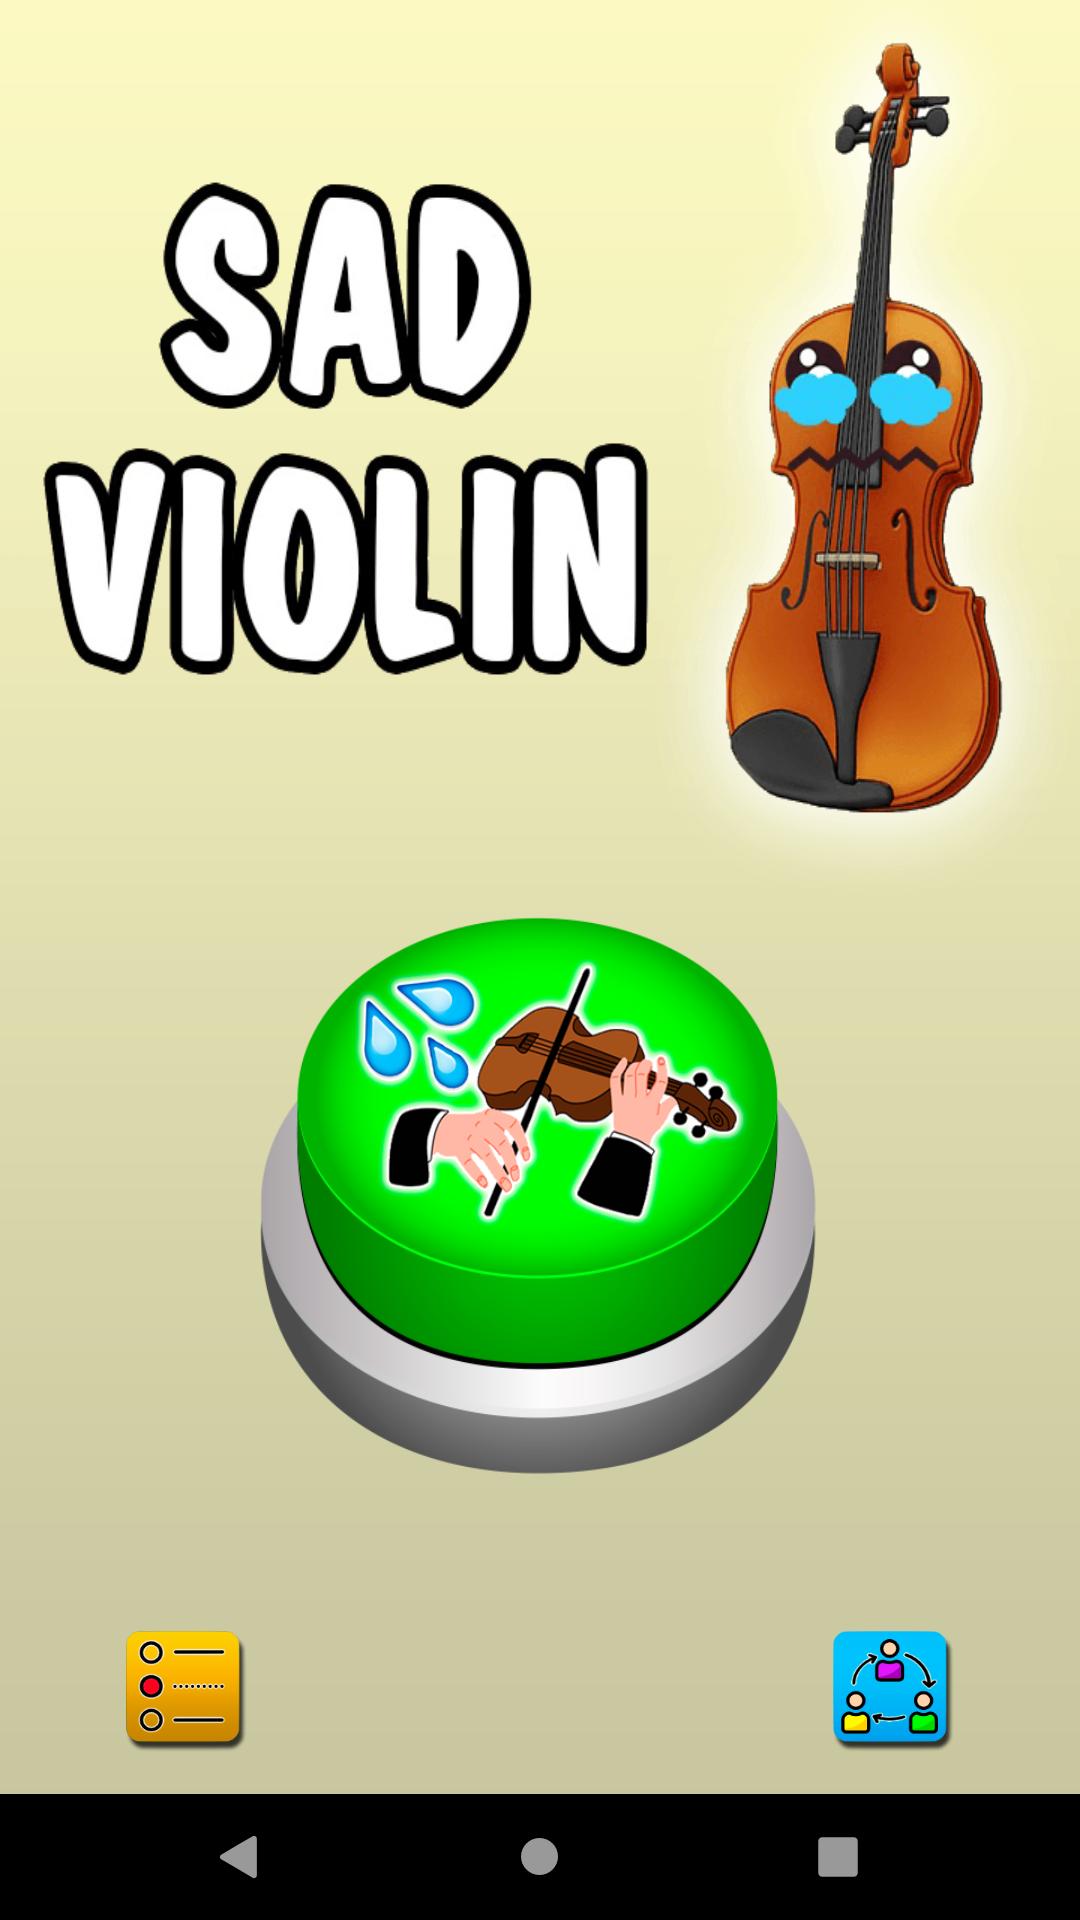 Sad violin meme. Sad Violin Мем. Скрипка MSM.